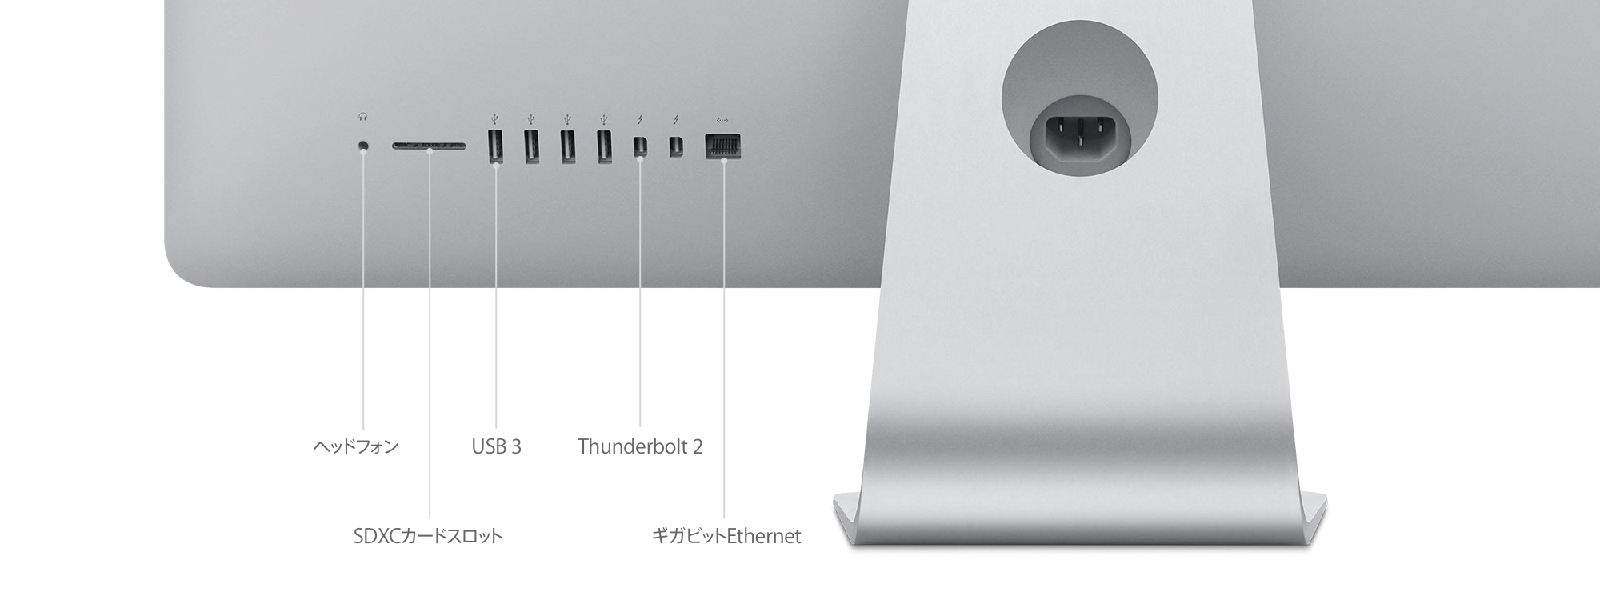 iMac (Retina 4K, 21.5-inch, Late 2015) - 技術仕様 (日本)